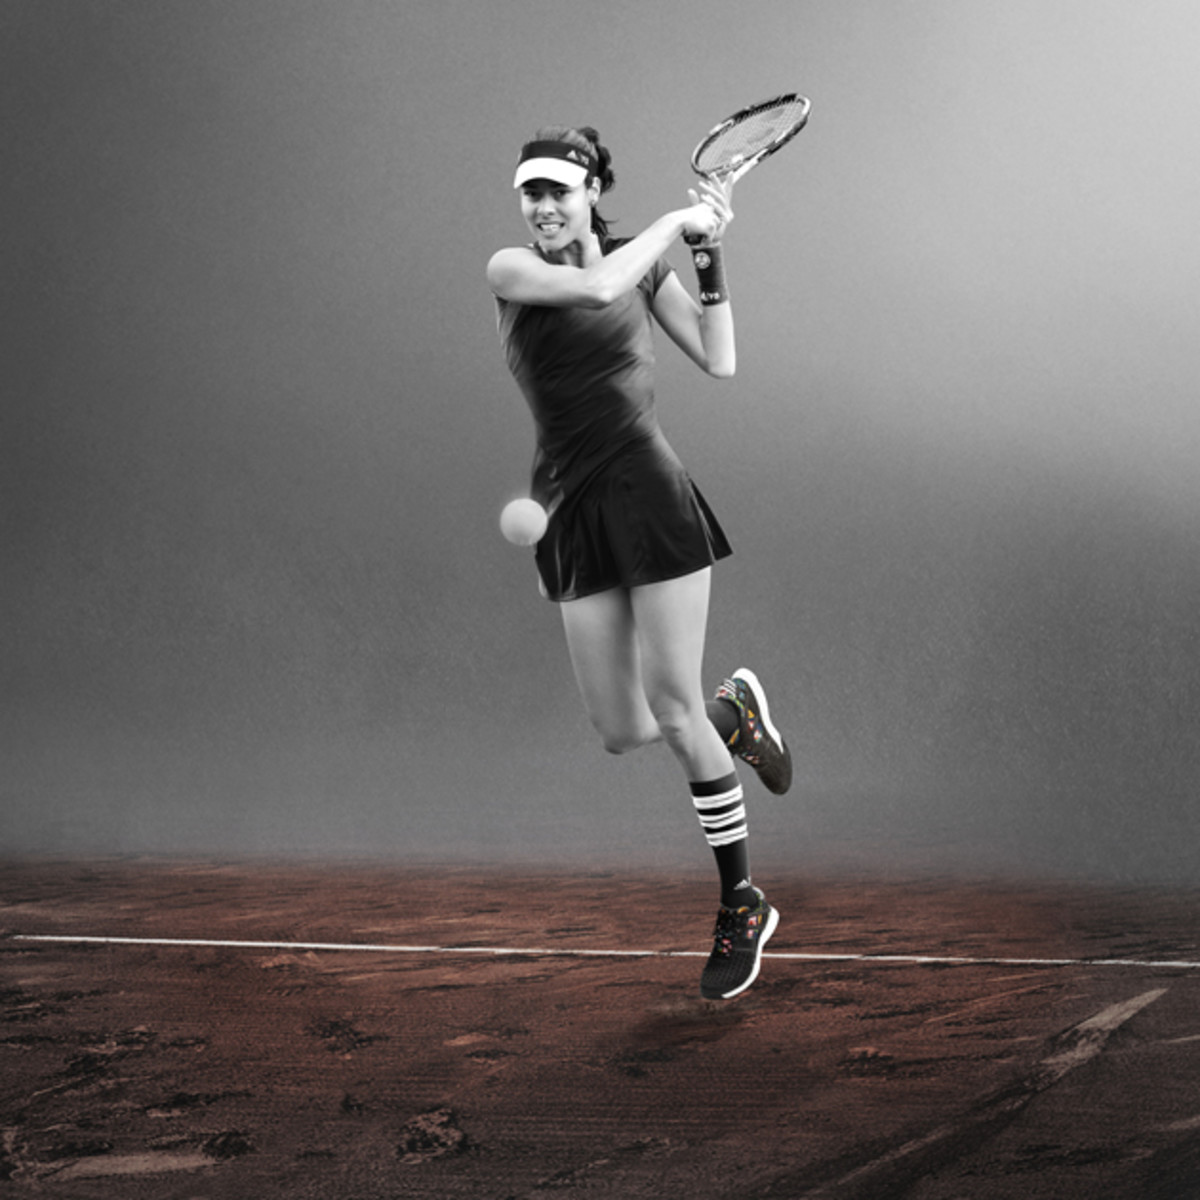 Roland Garros: Ana Ivanovic's new 